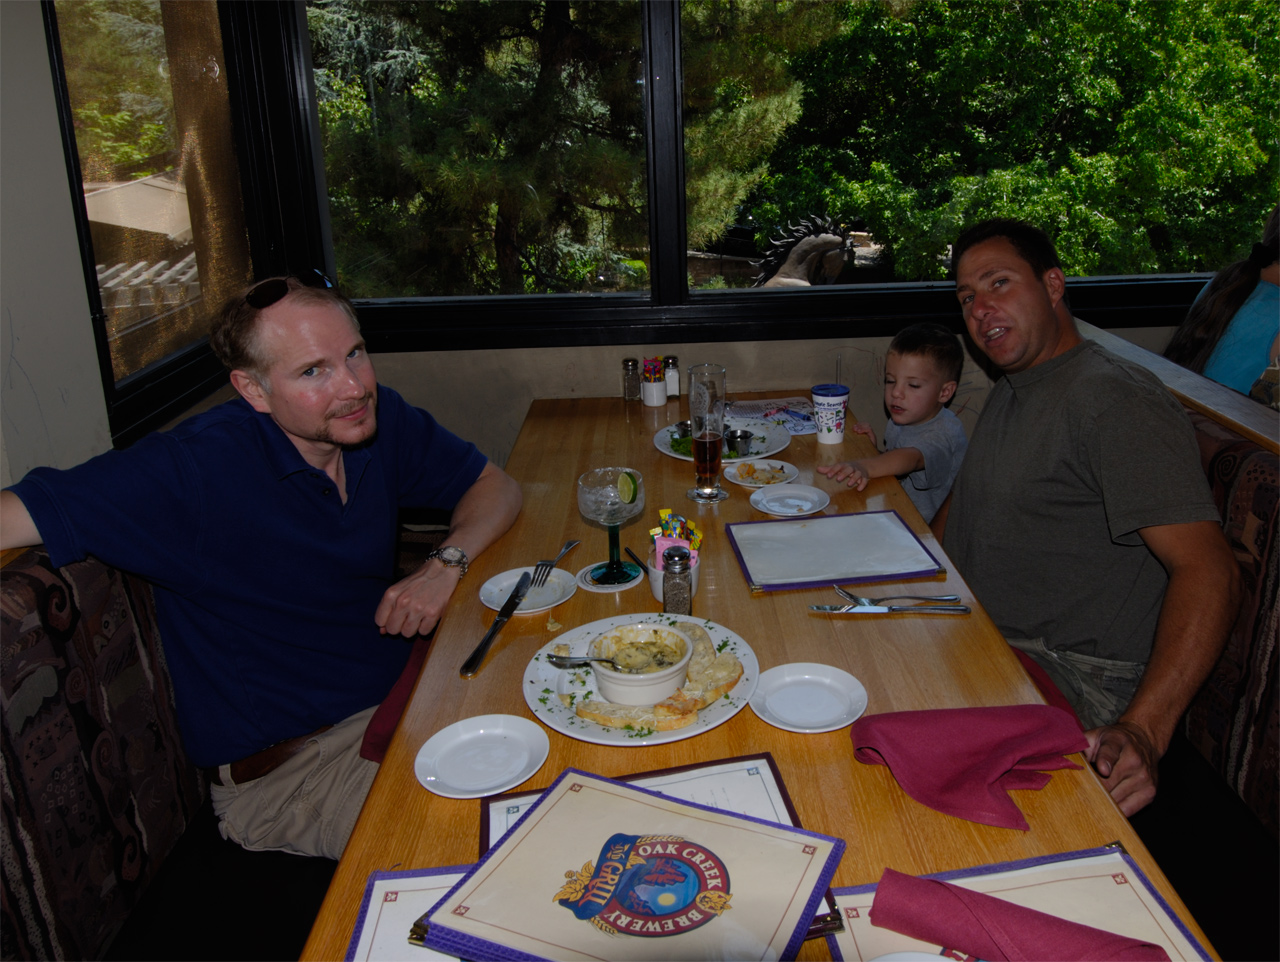 Marc, Hunter and Tom at the OAK CREEK Restaurant in Tlaquepaque